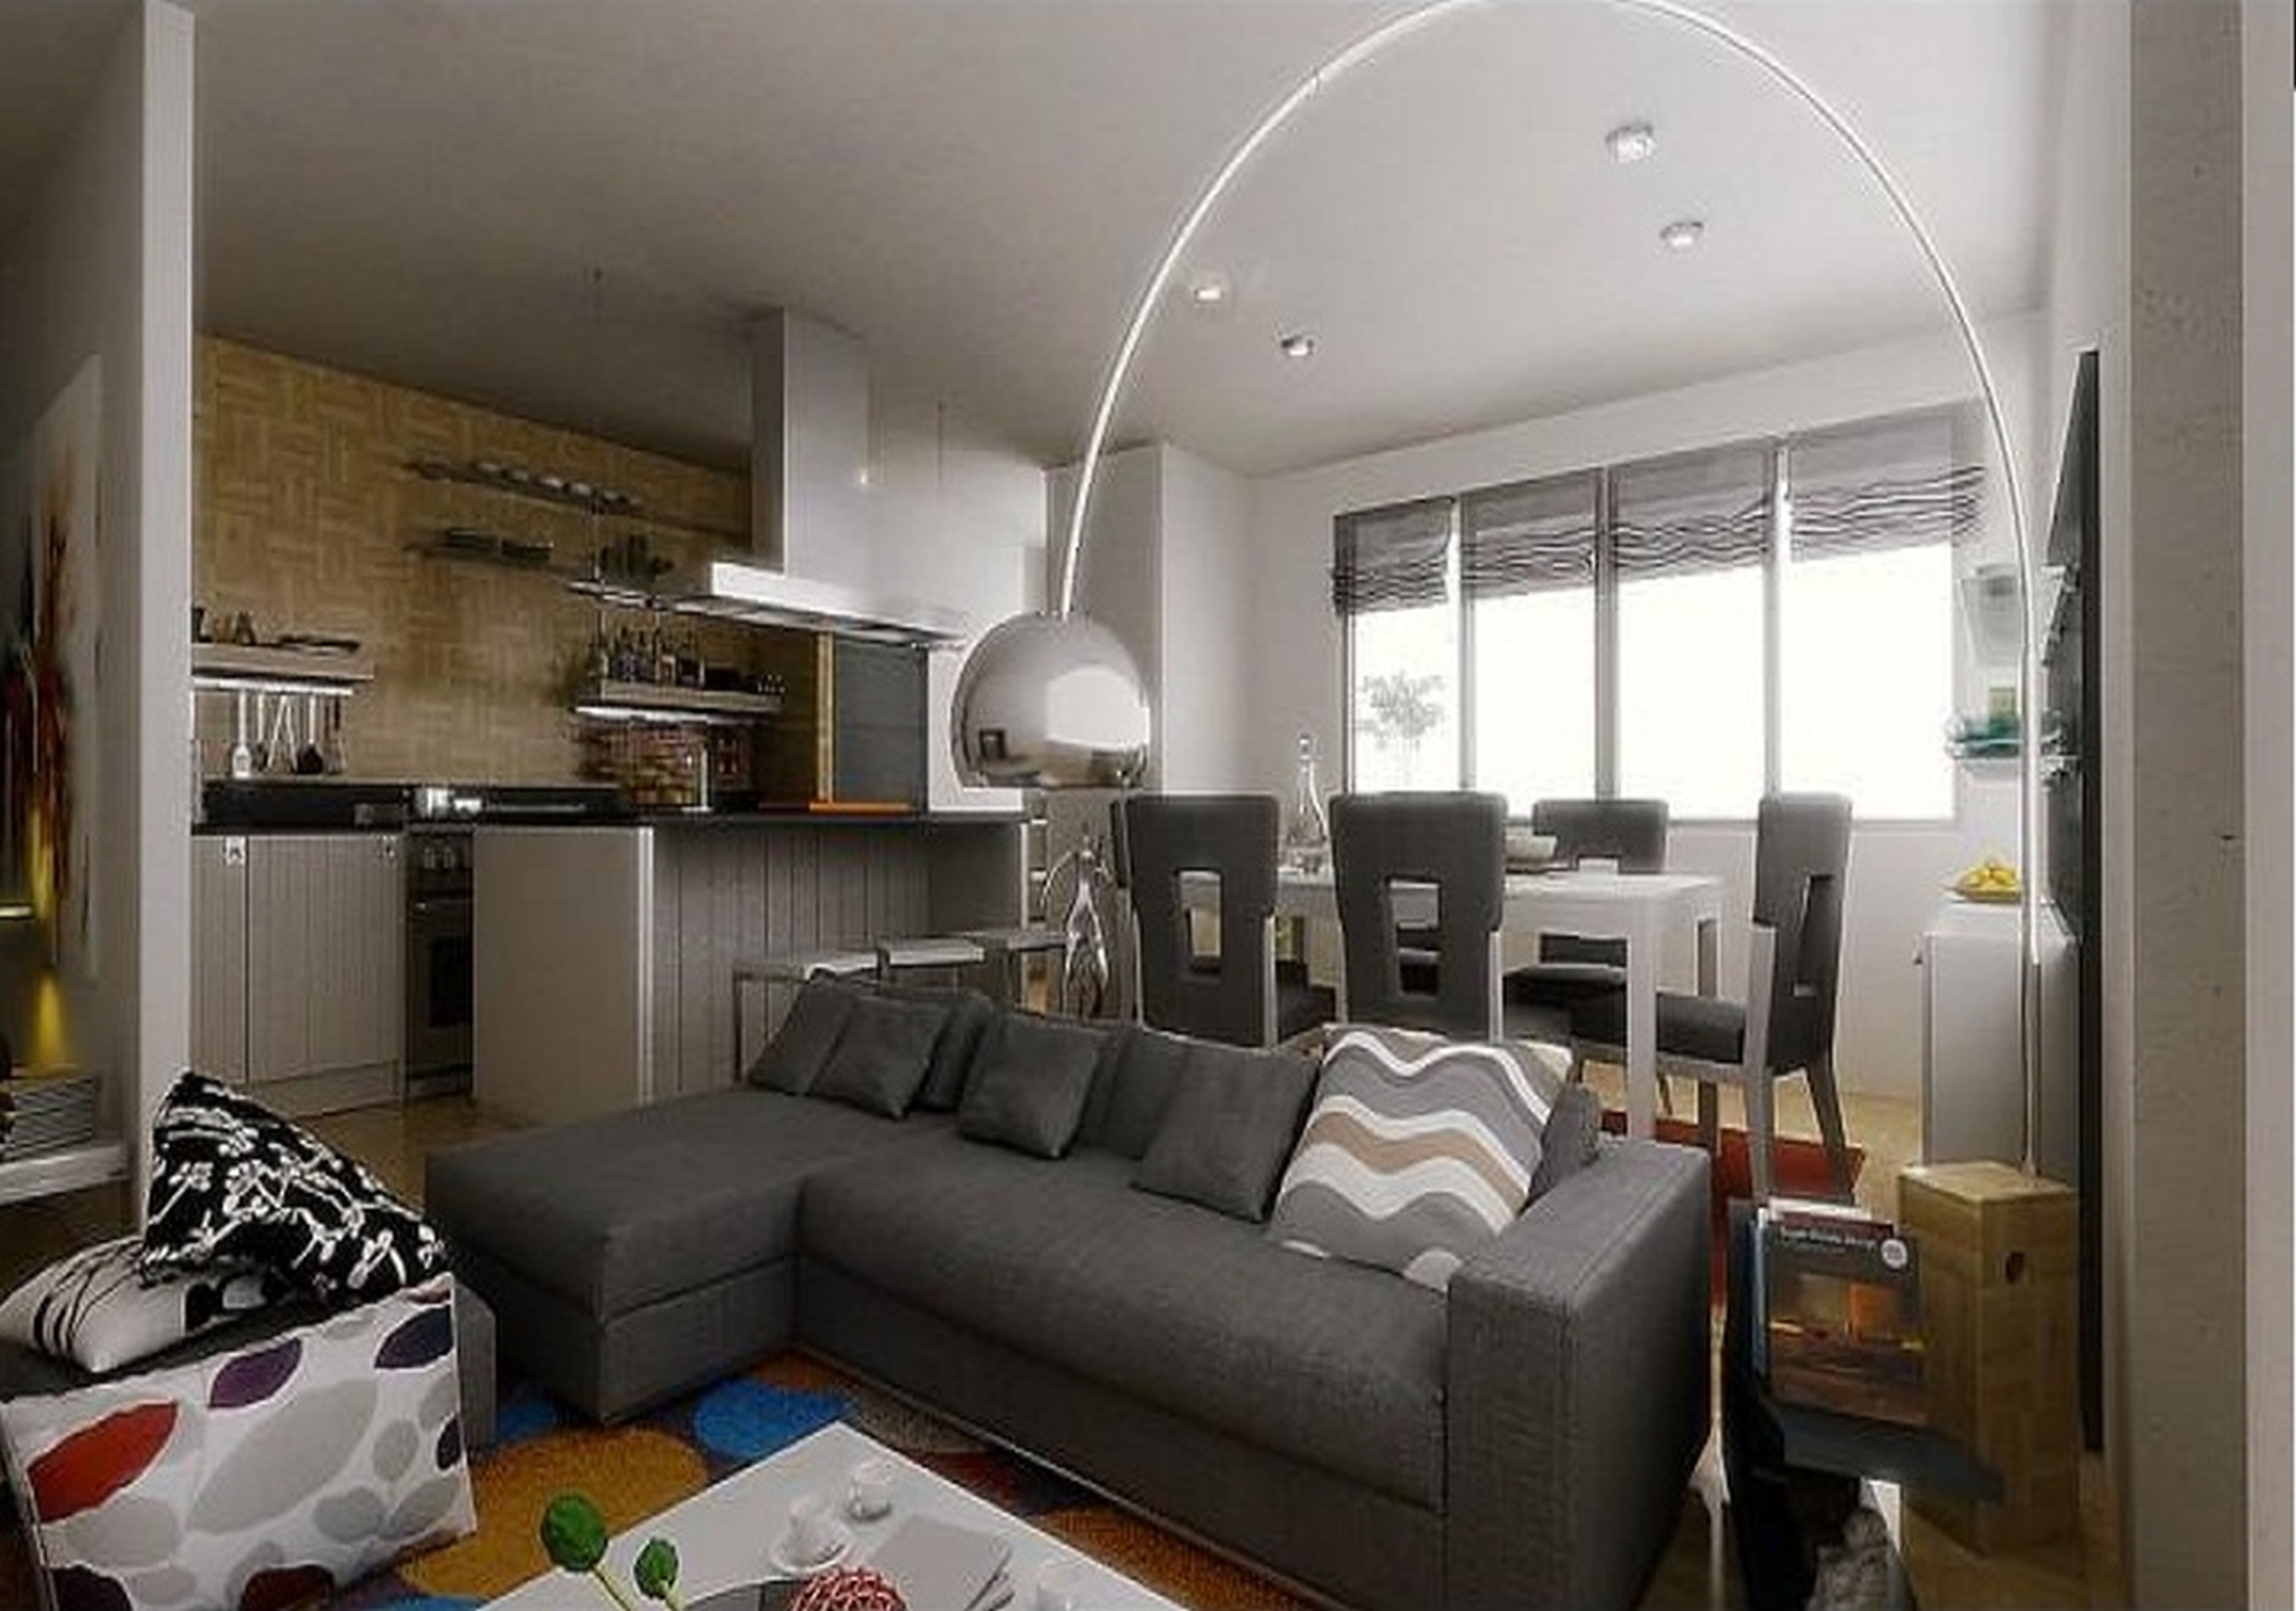 Apartment Living Room Decorating Inspirational Apartment Living Room Ideas You Can Apply In Affordable Ways Traba Homes